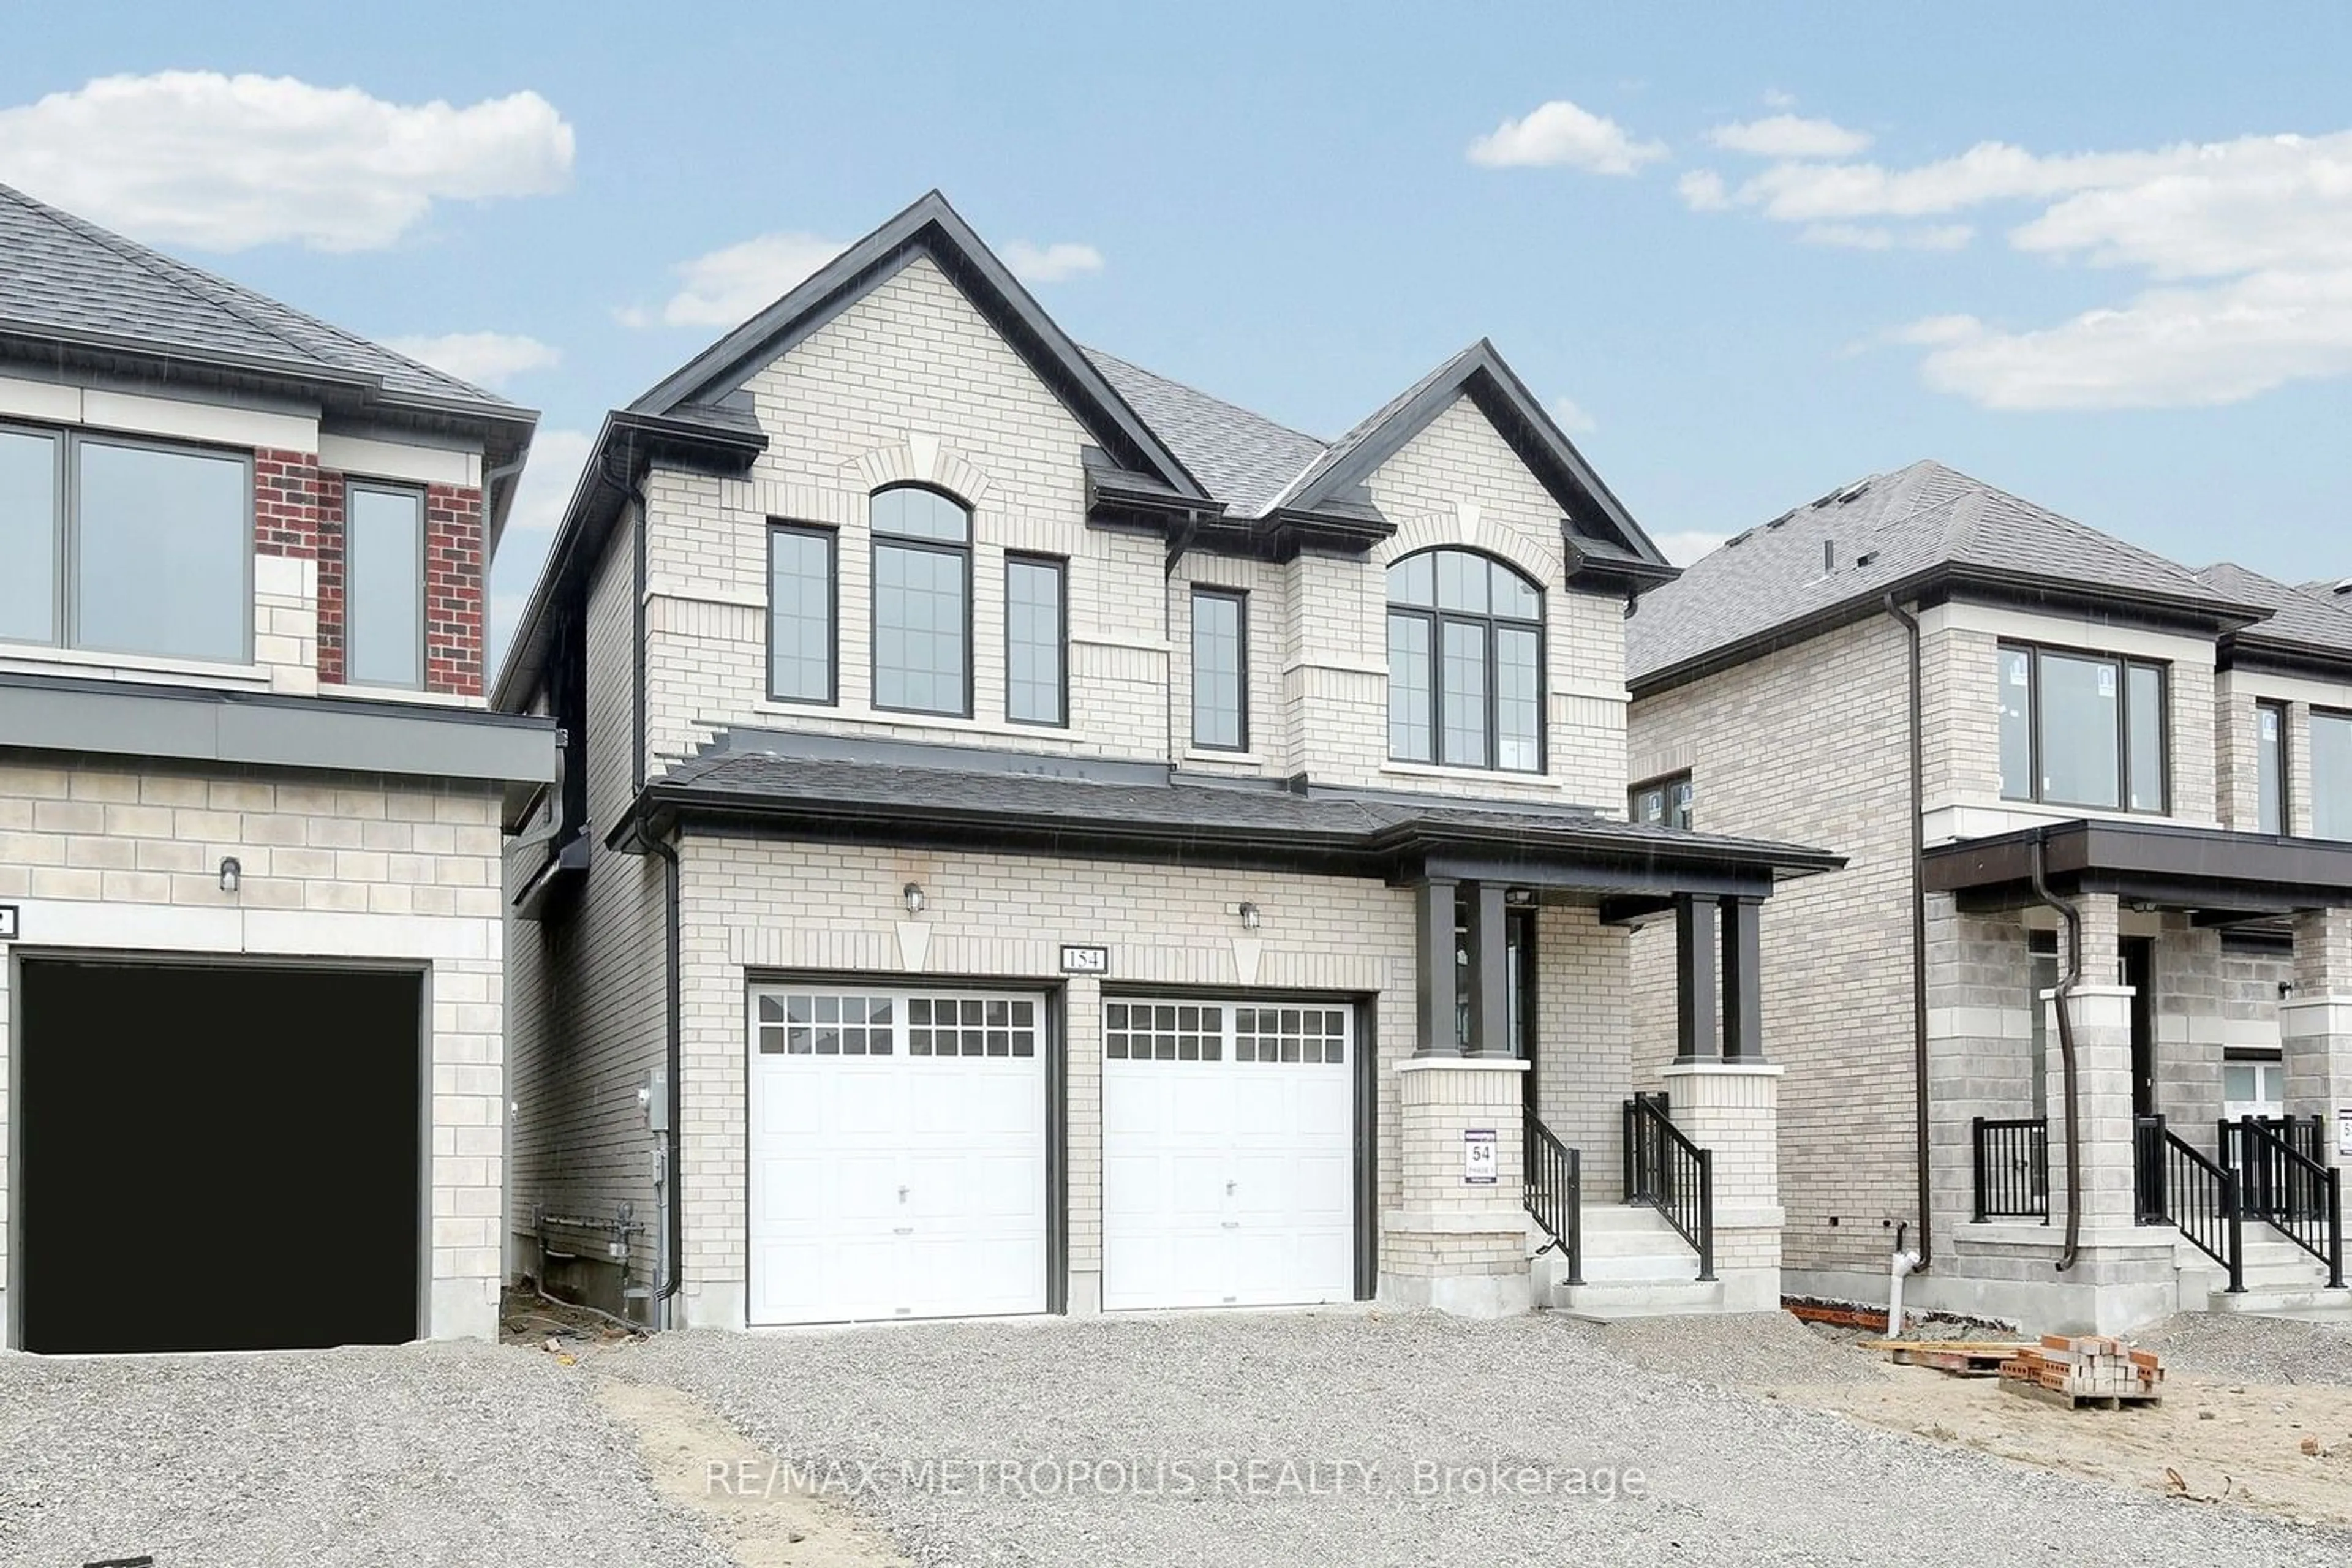 Home with brick exterior material for 154 St Joseph Rd, Kawartha Lakes Ontario K9V 6C2